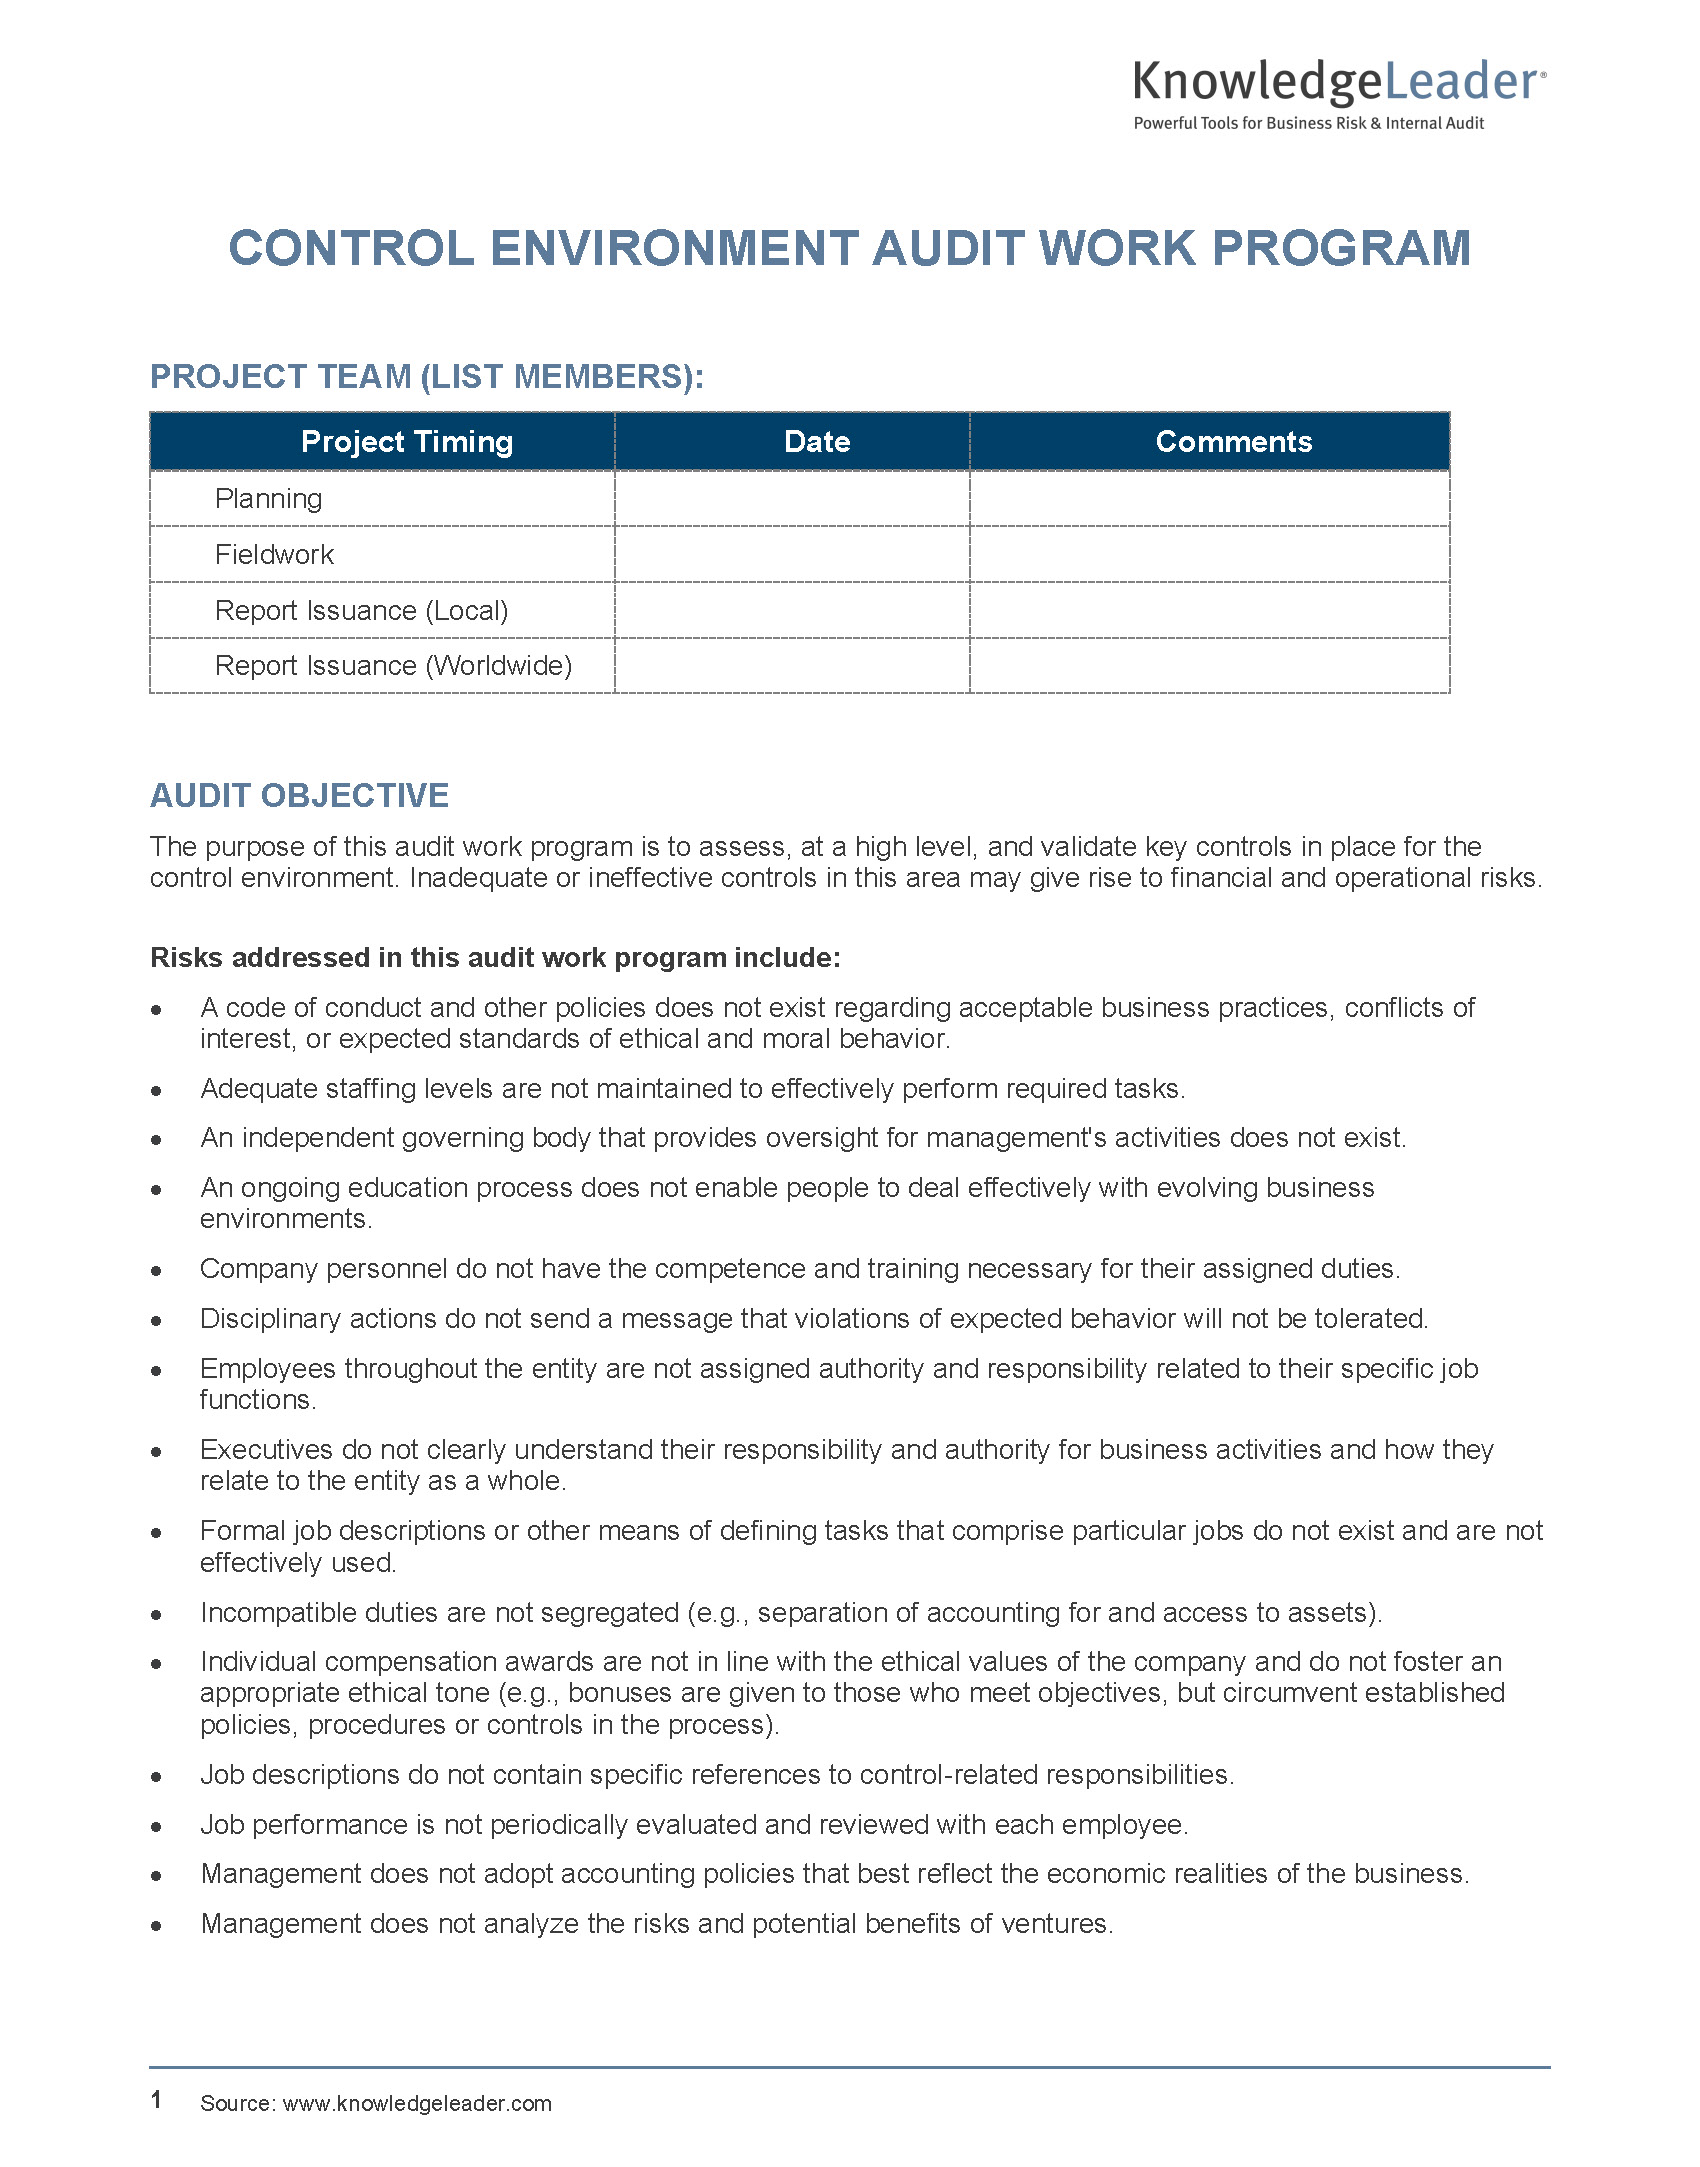 Control Environment Audit Work Program